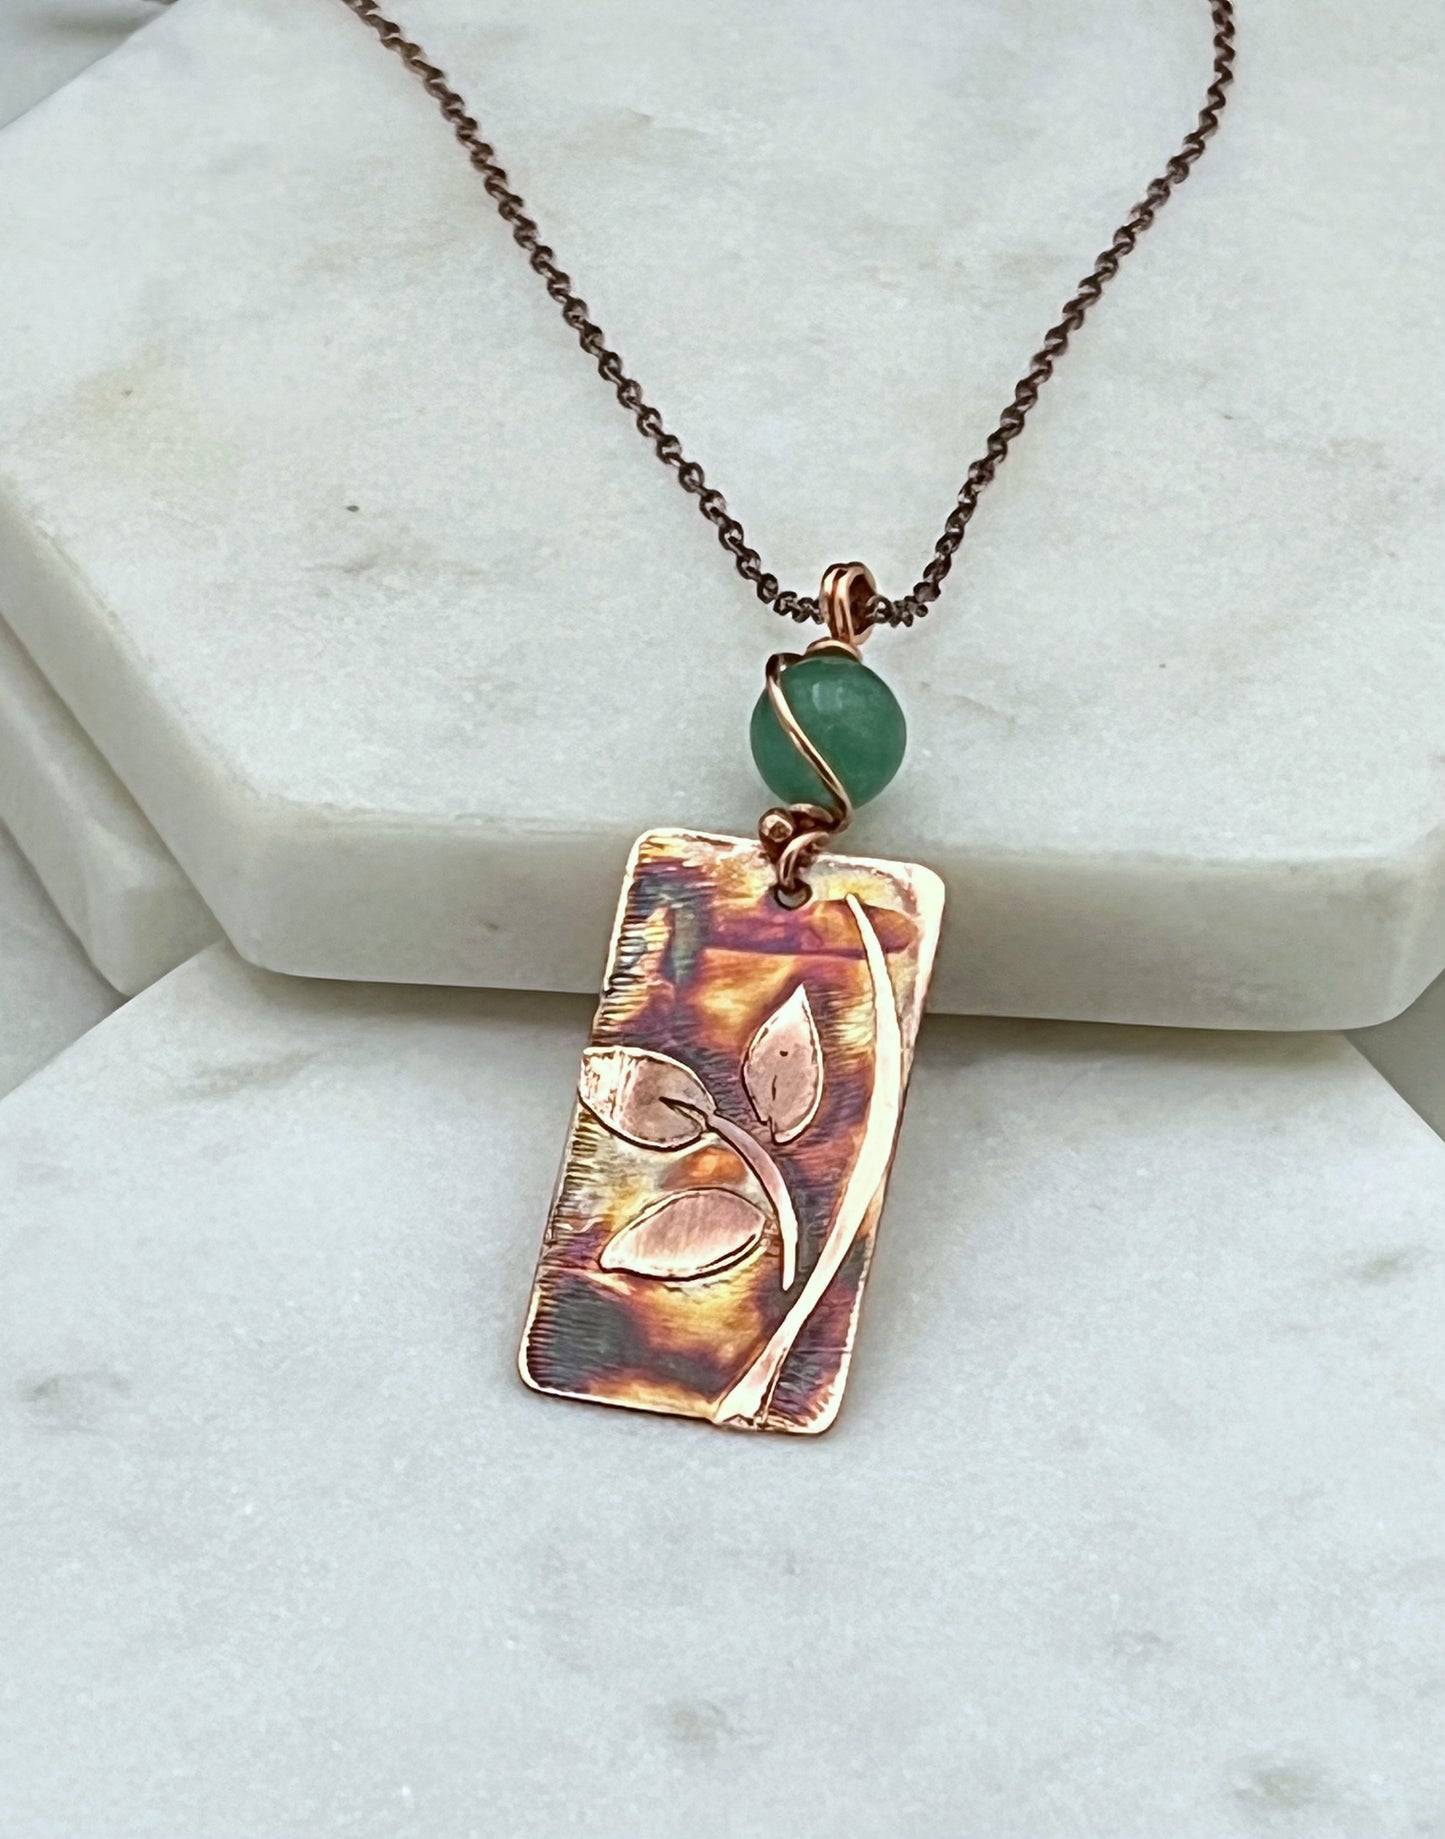 Acid etched copper leaf necklace with aventurine gemstone